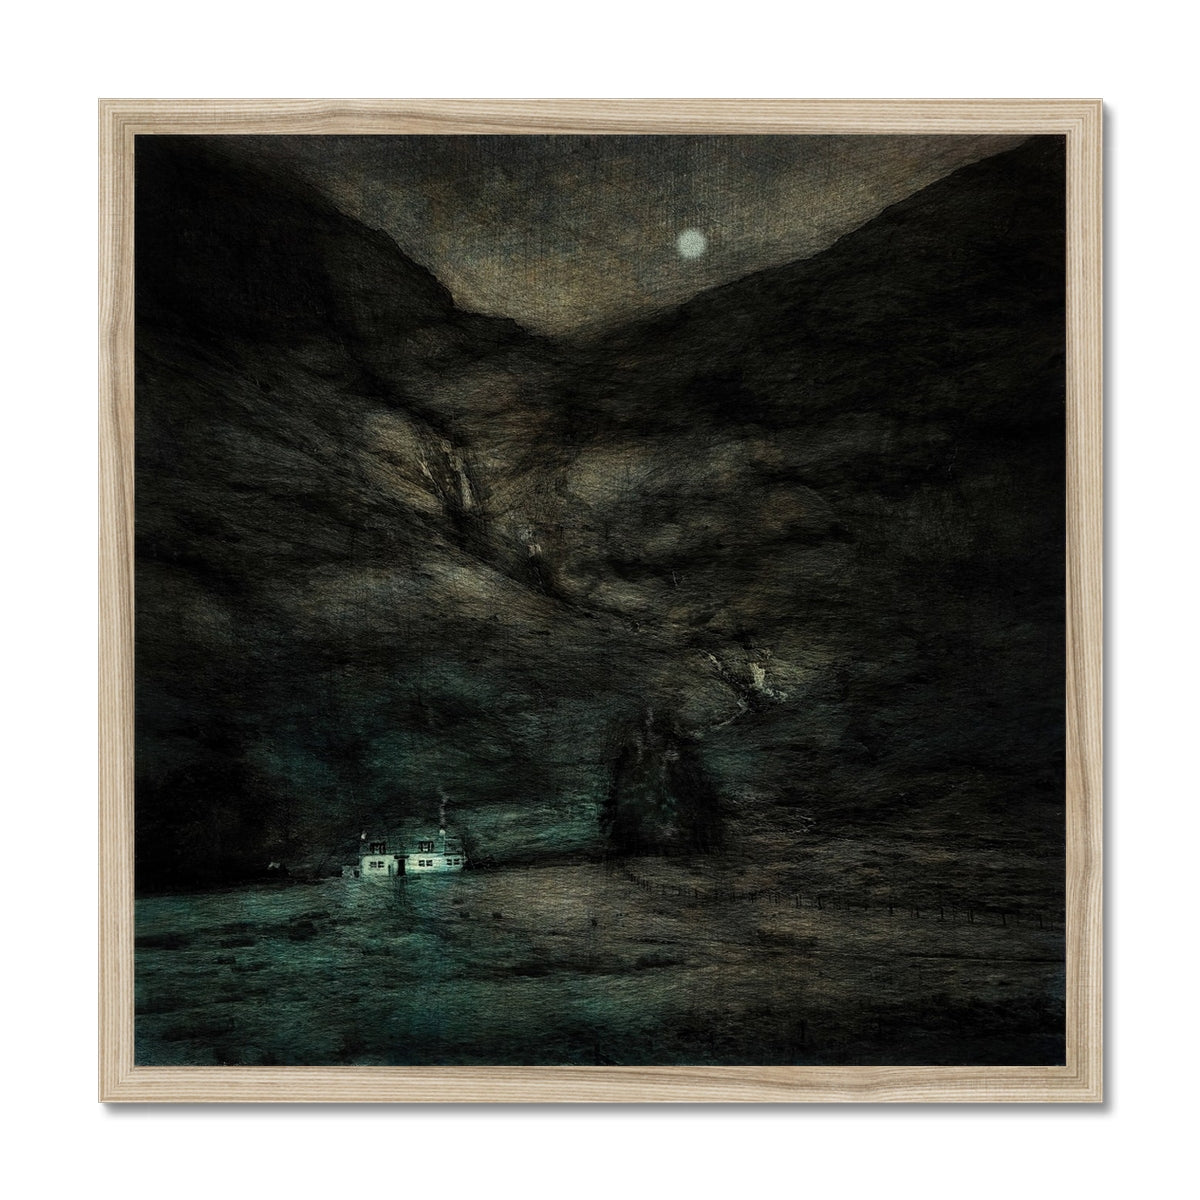 Glencoe Cottage Moonlight Painting | Framed Prints From Scotland-Framed Prints-Glencoe Art Gallery-20"x20"-Natural Frame-Paintings, Prints, Homeware, Art Gifts From Scotland By Scottish Artist Kevin Hunter